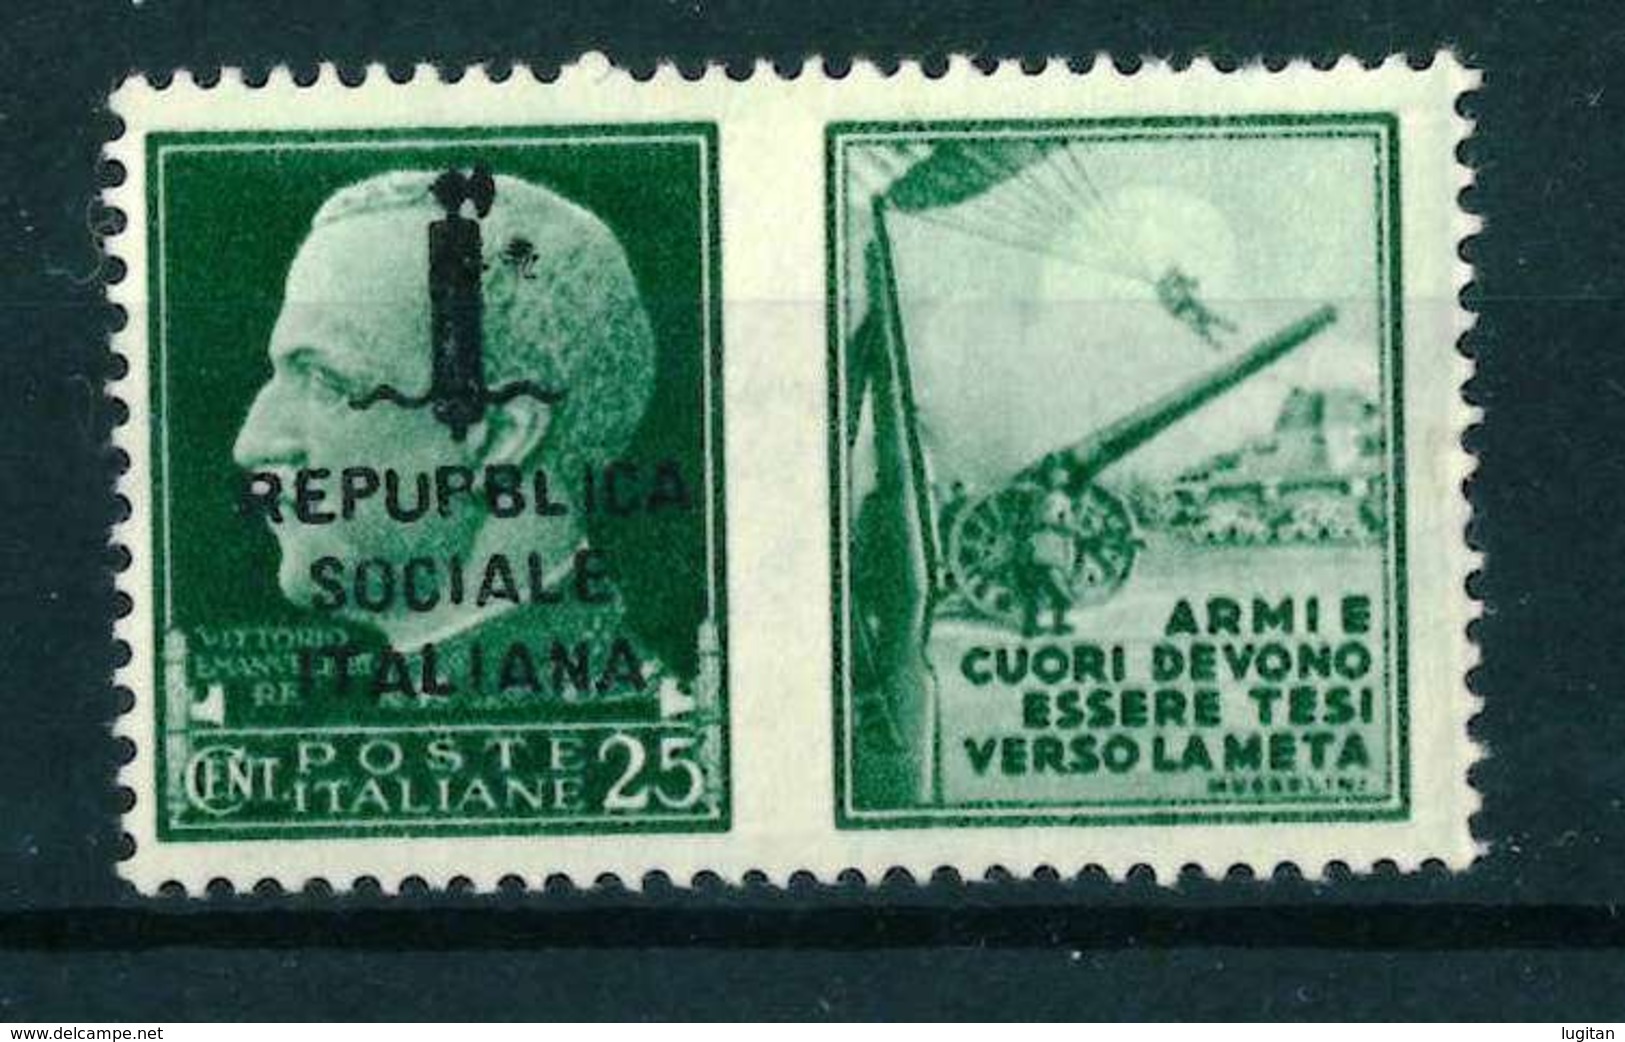 VARIETA' - REPUBPLICA ITALIANA SASS. 26 H - NUOVO MNH**  - PROPAGANDA DI GUERRA - Propagande De Guerre